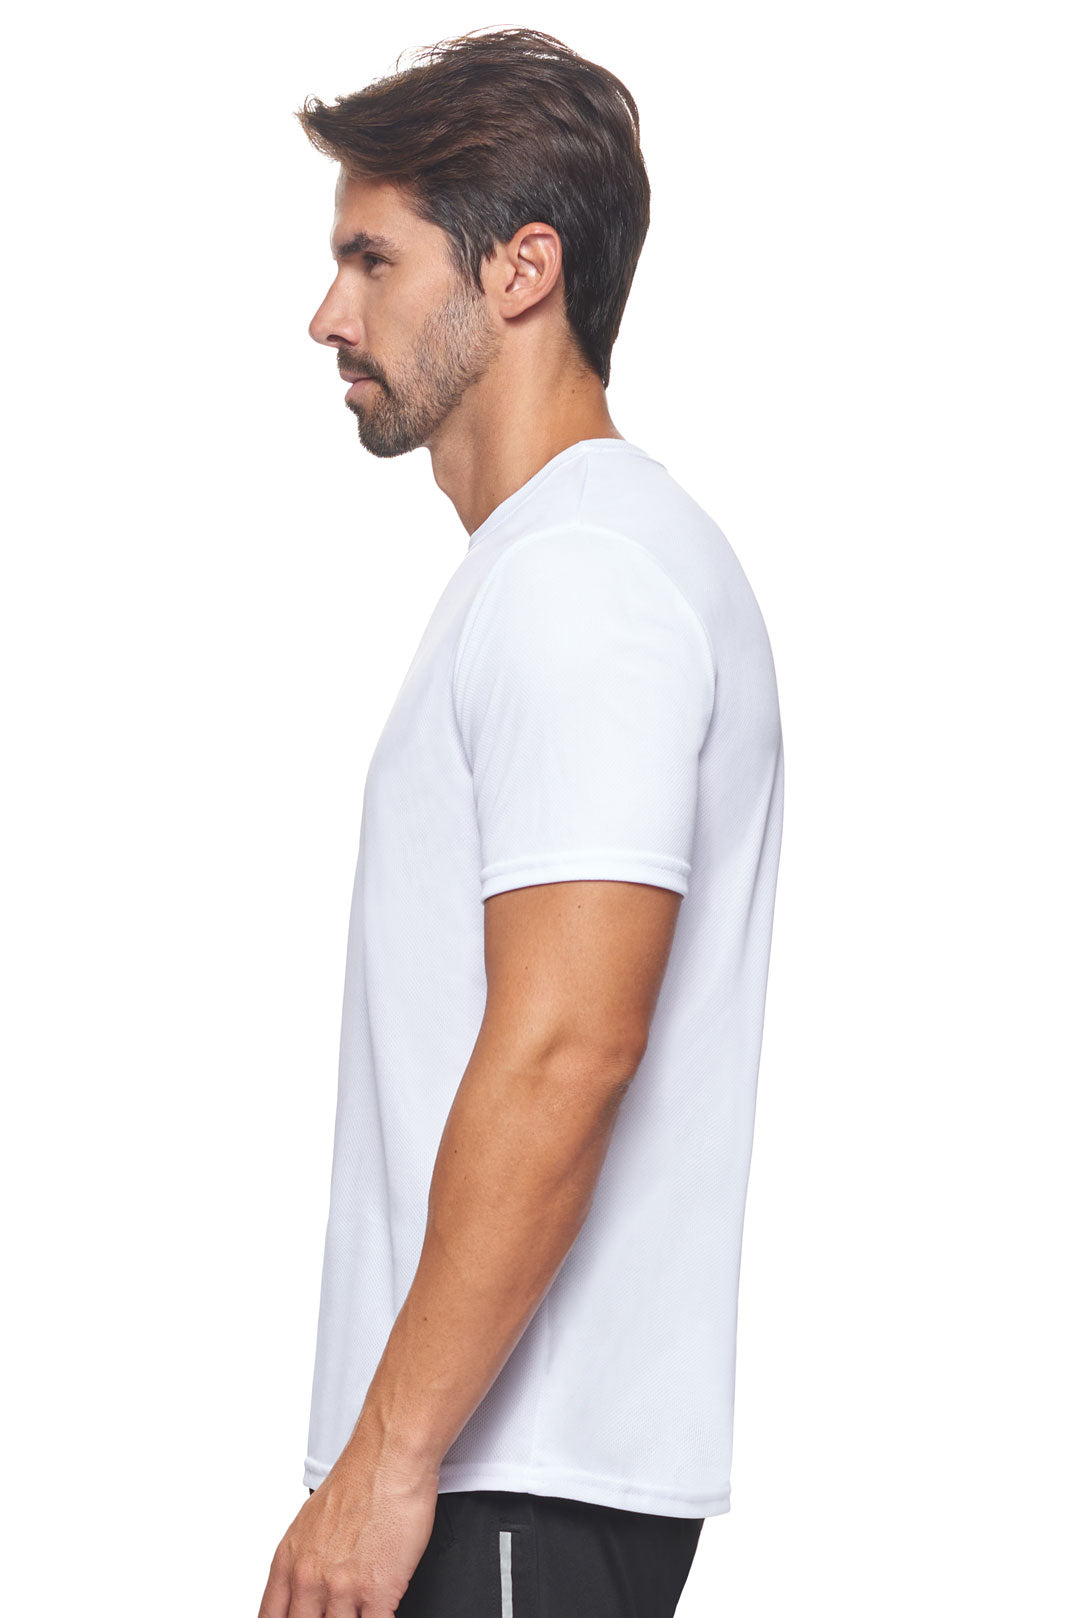 Expert Brand Wholesale Men's Oxymesh Tec Tee Performance Fitness Running Shirt in white image 2#white